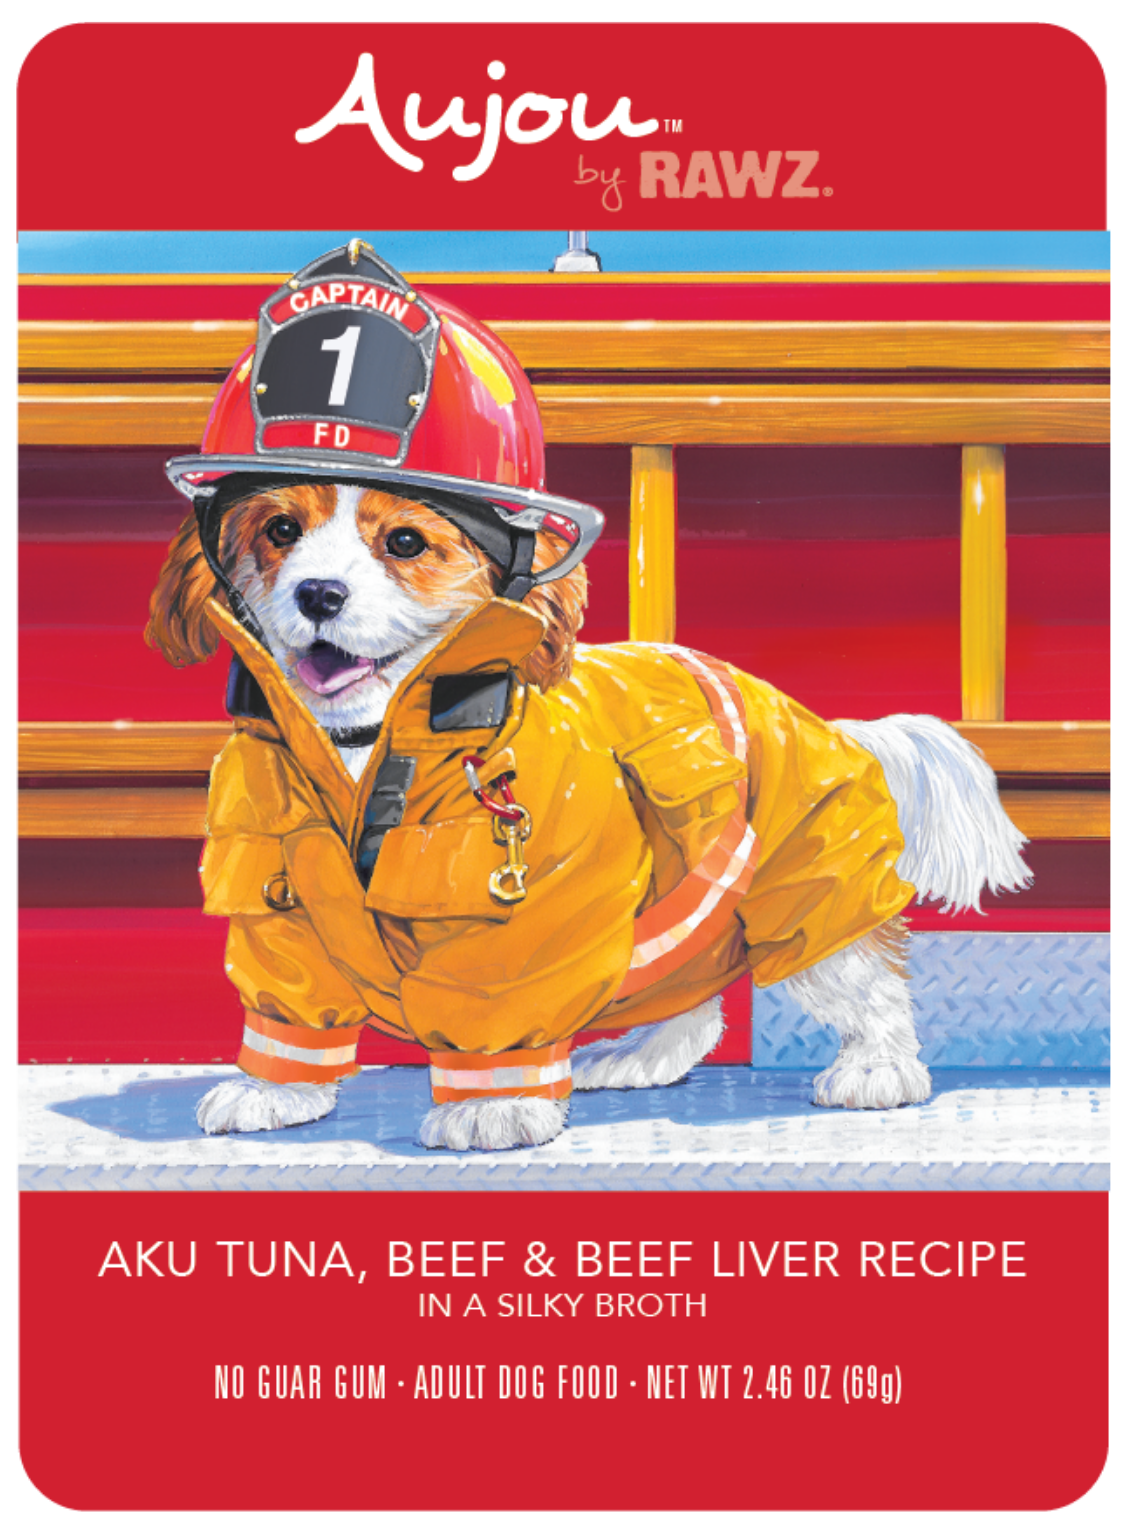 RAWZ Aujou Shreds Aku Tuna, Beef & Beef Liver Dog Pouch 2.46 oz. - Click Image to Close